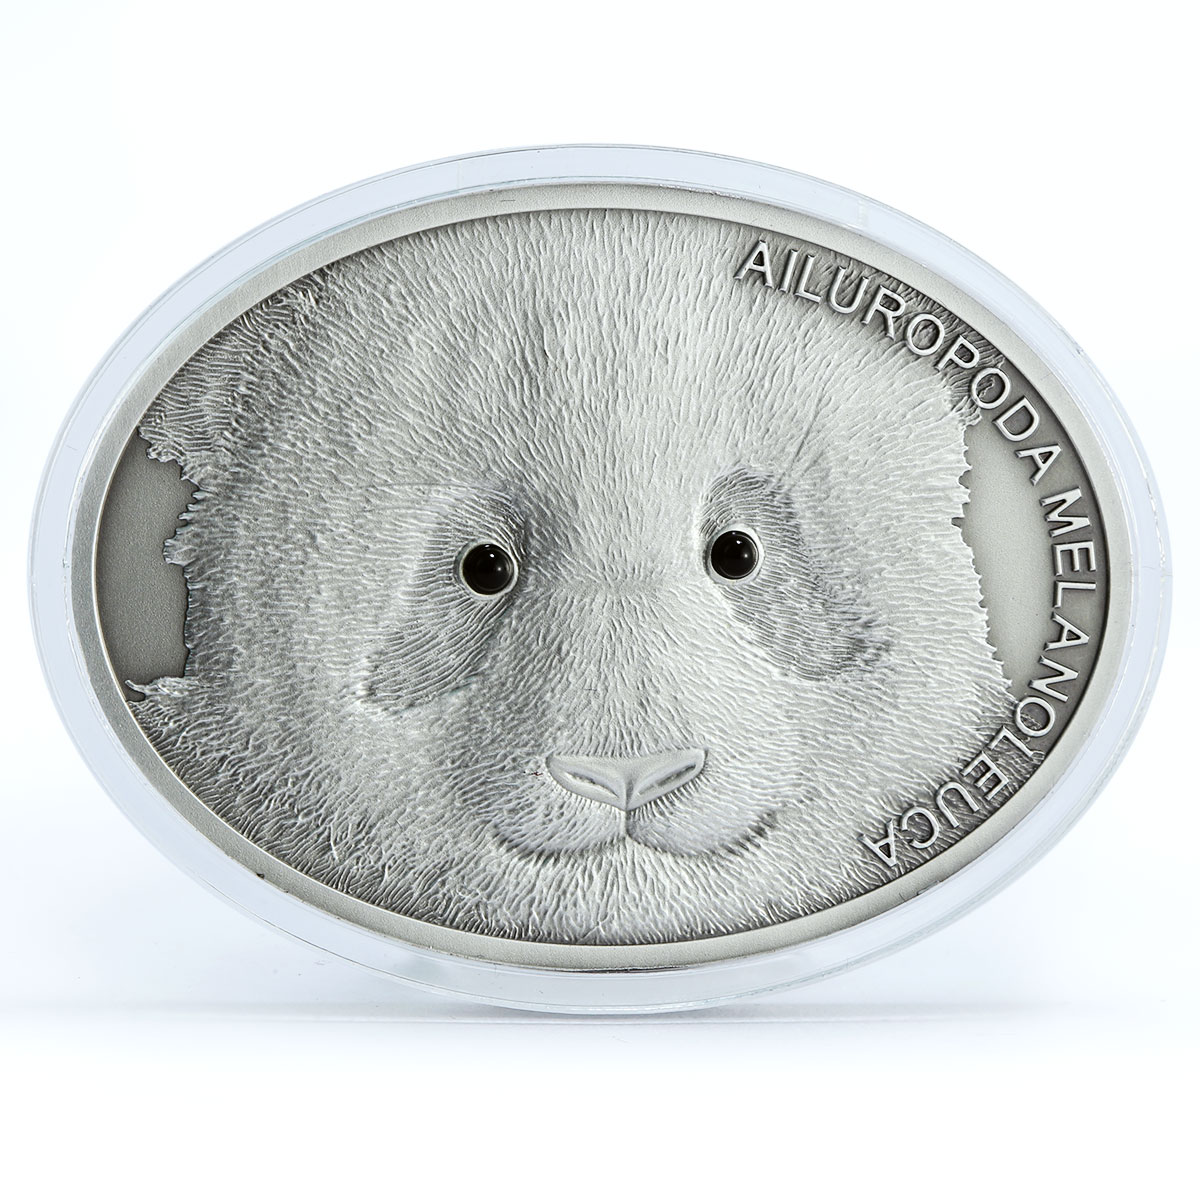 Fiji 10 dollars Endangered Wildlife Giant Panda Bear Fauna silver coin 2013